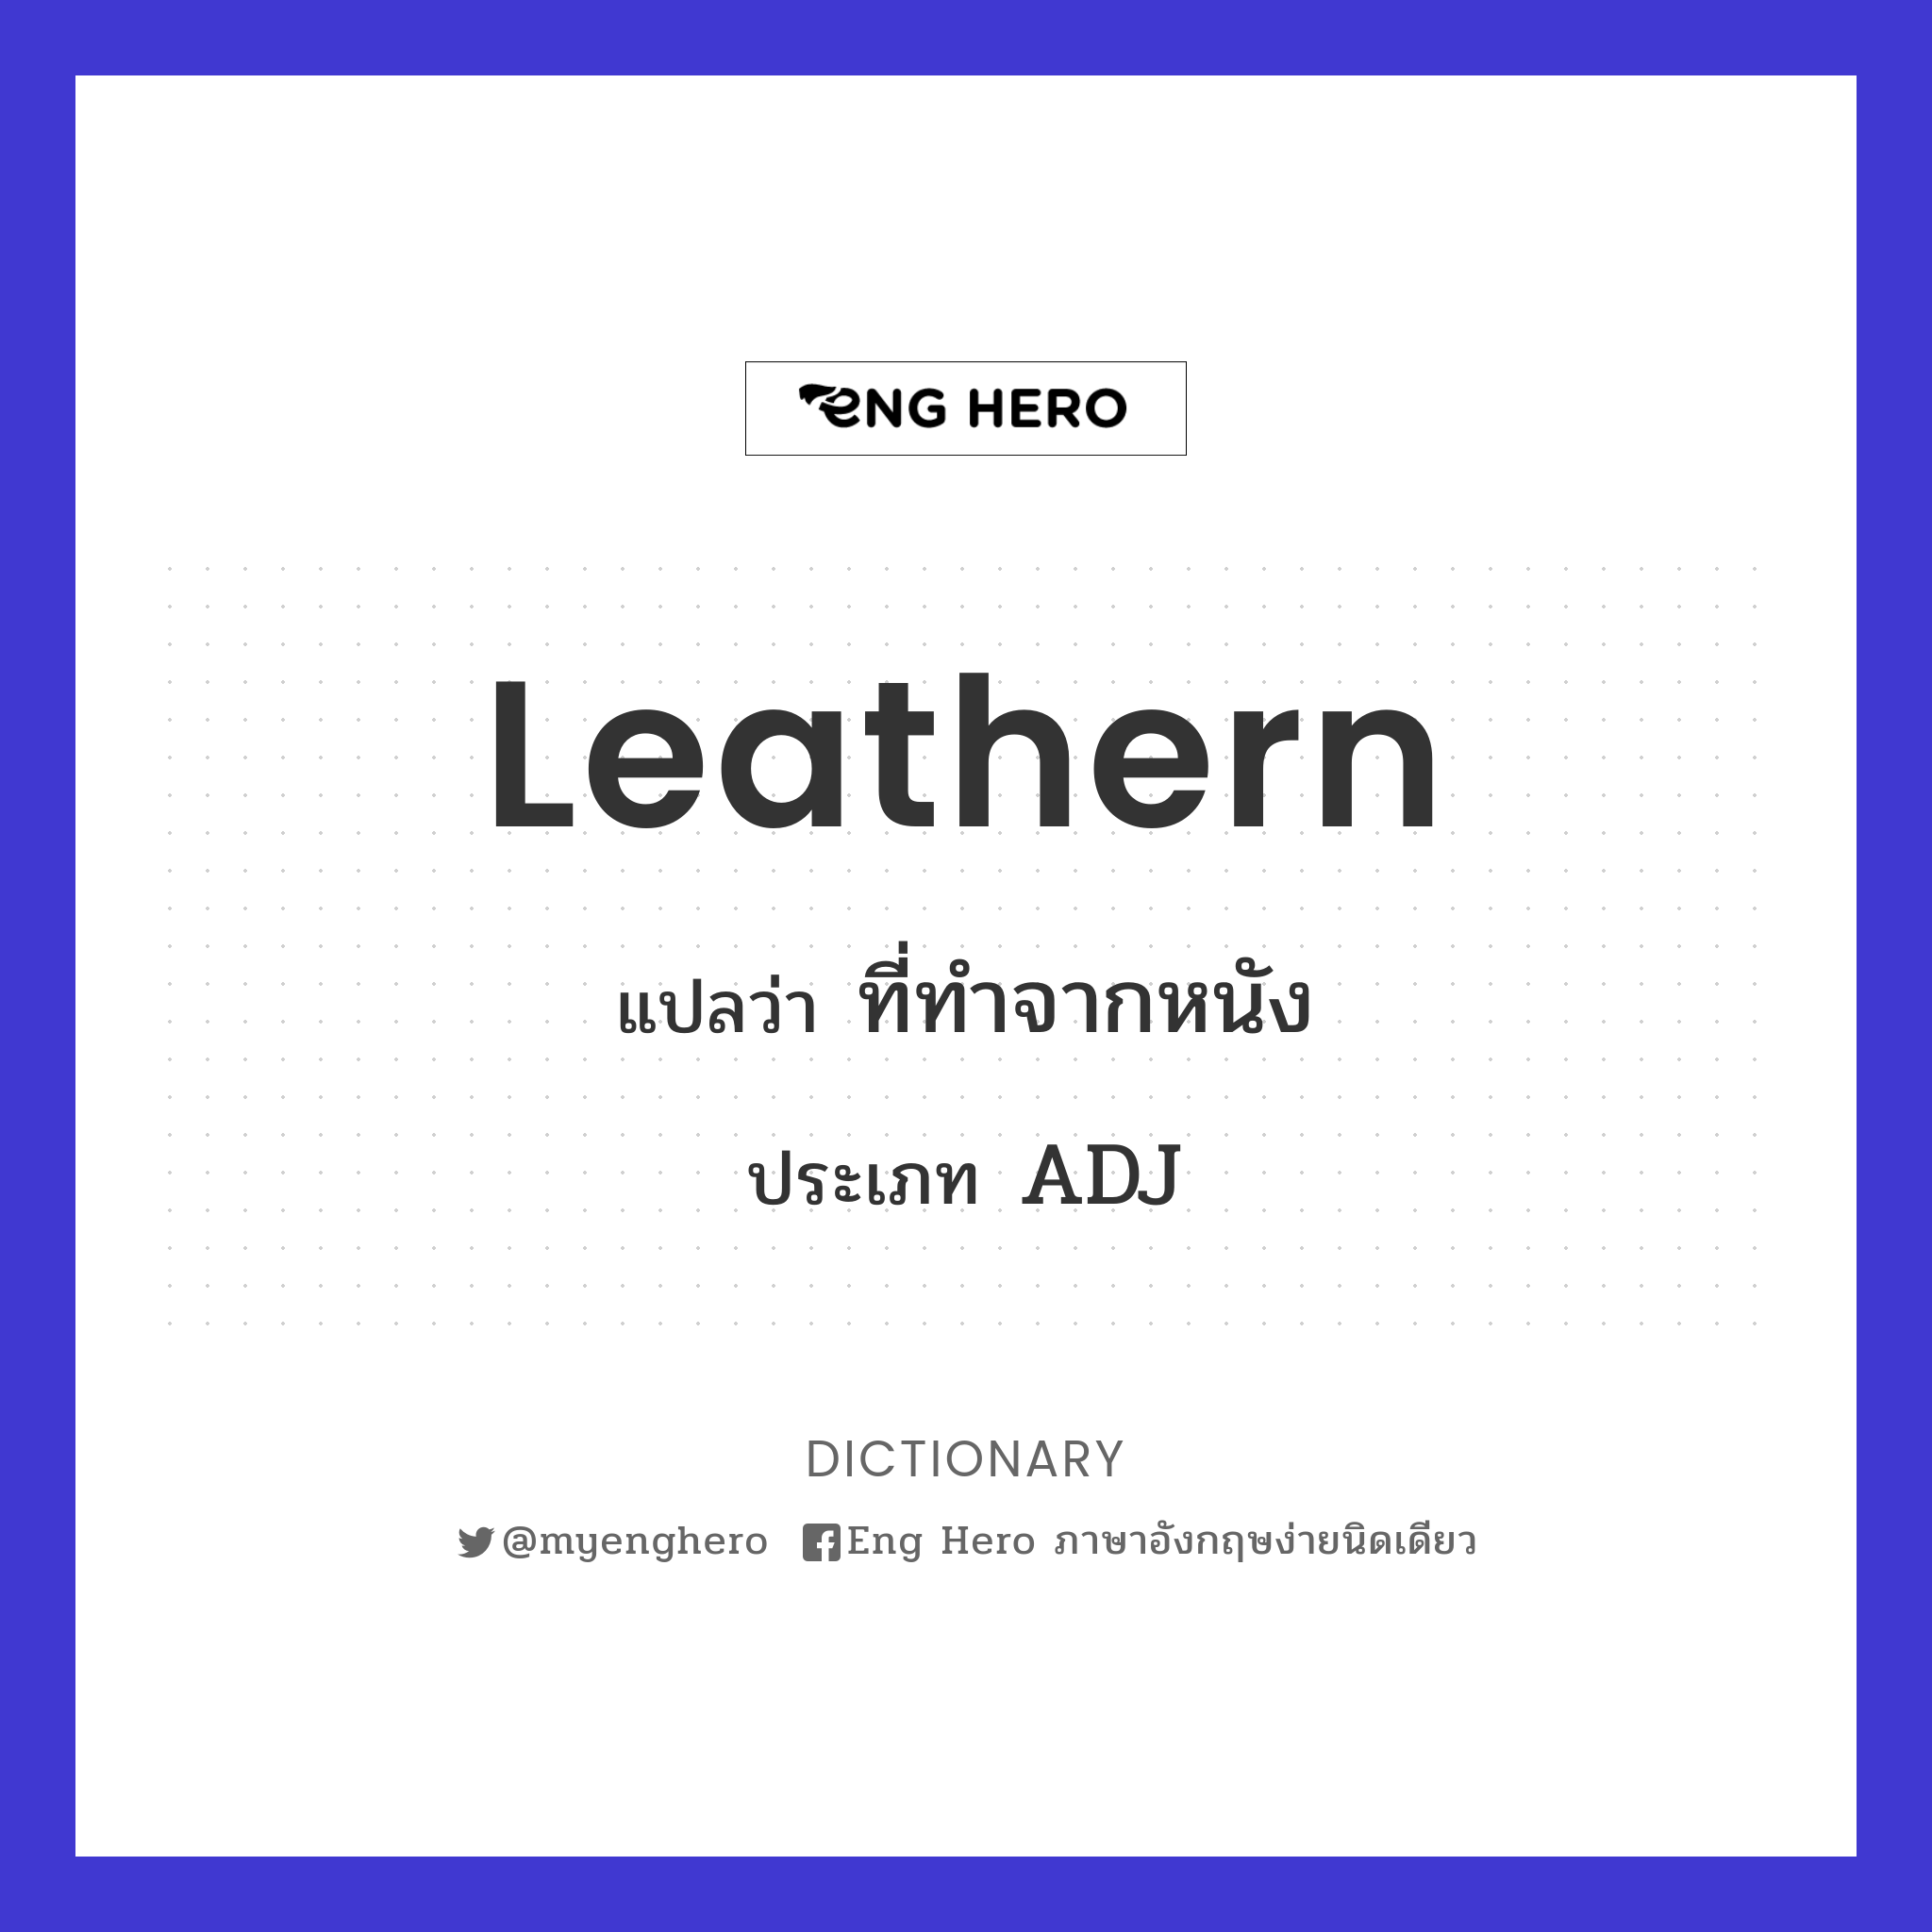 leathern